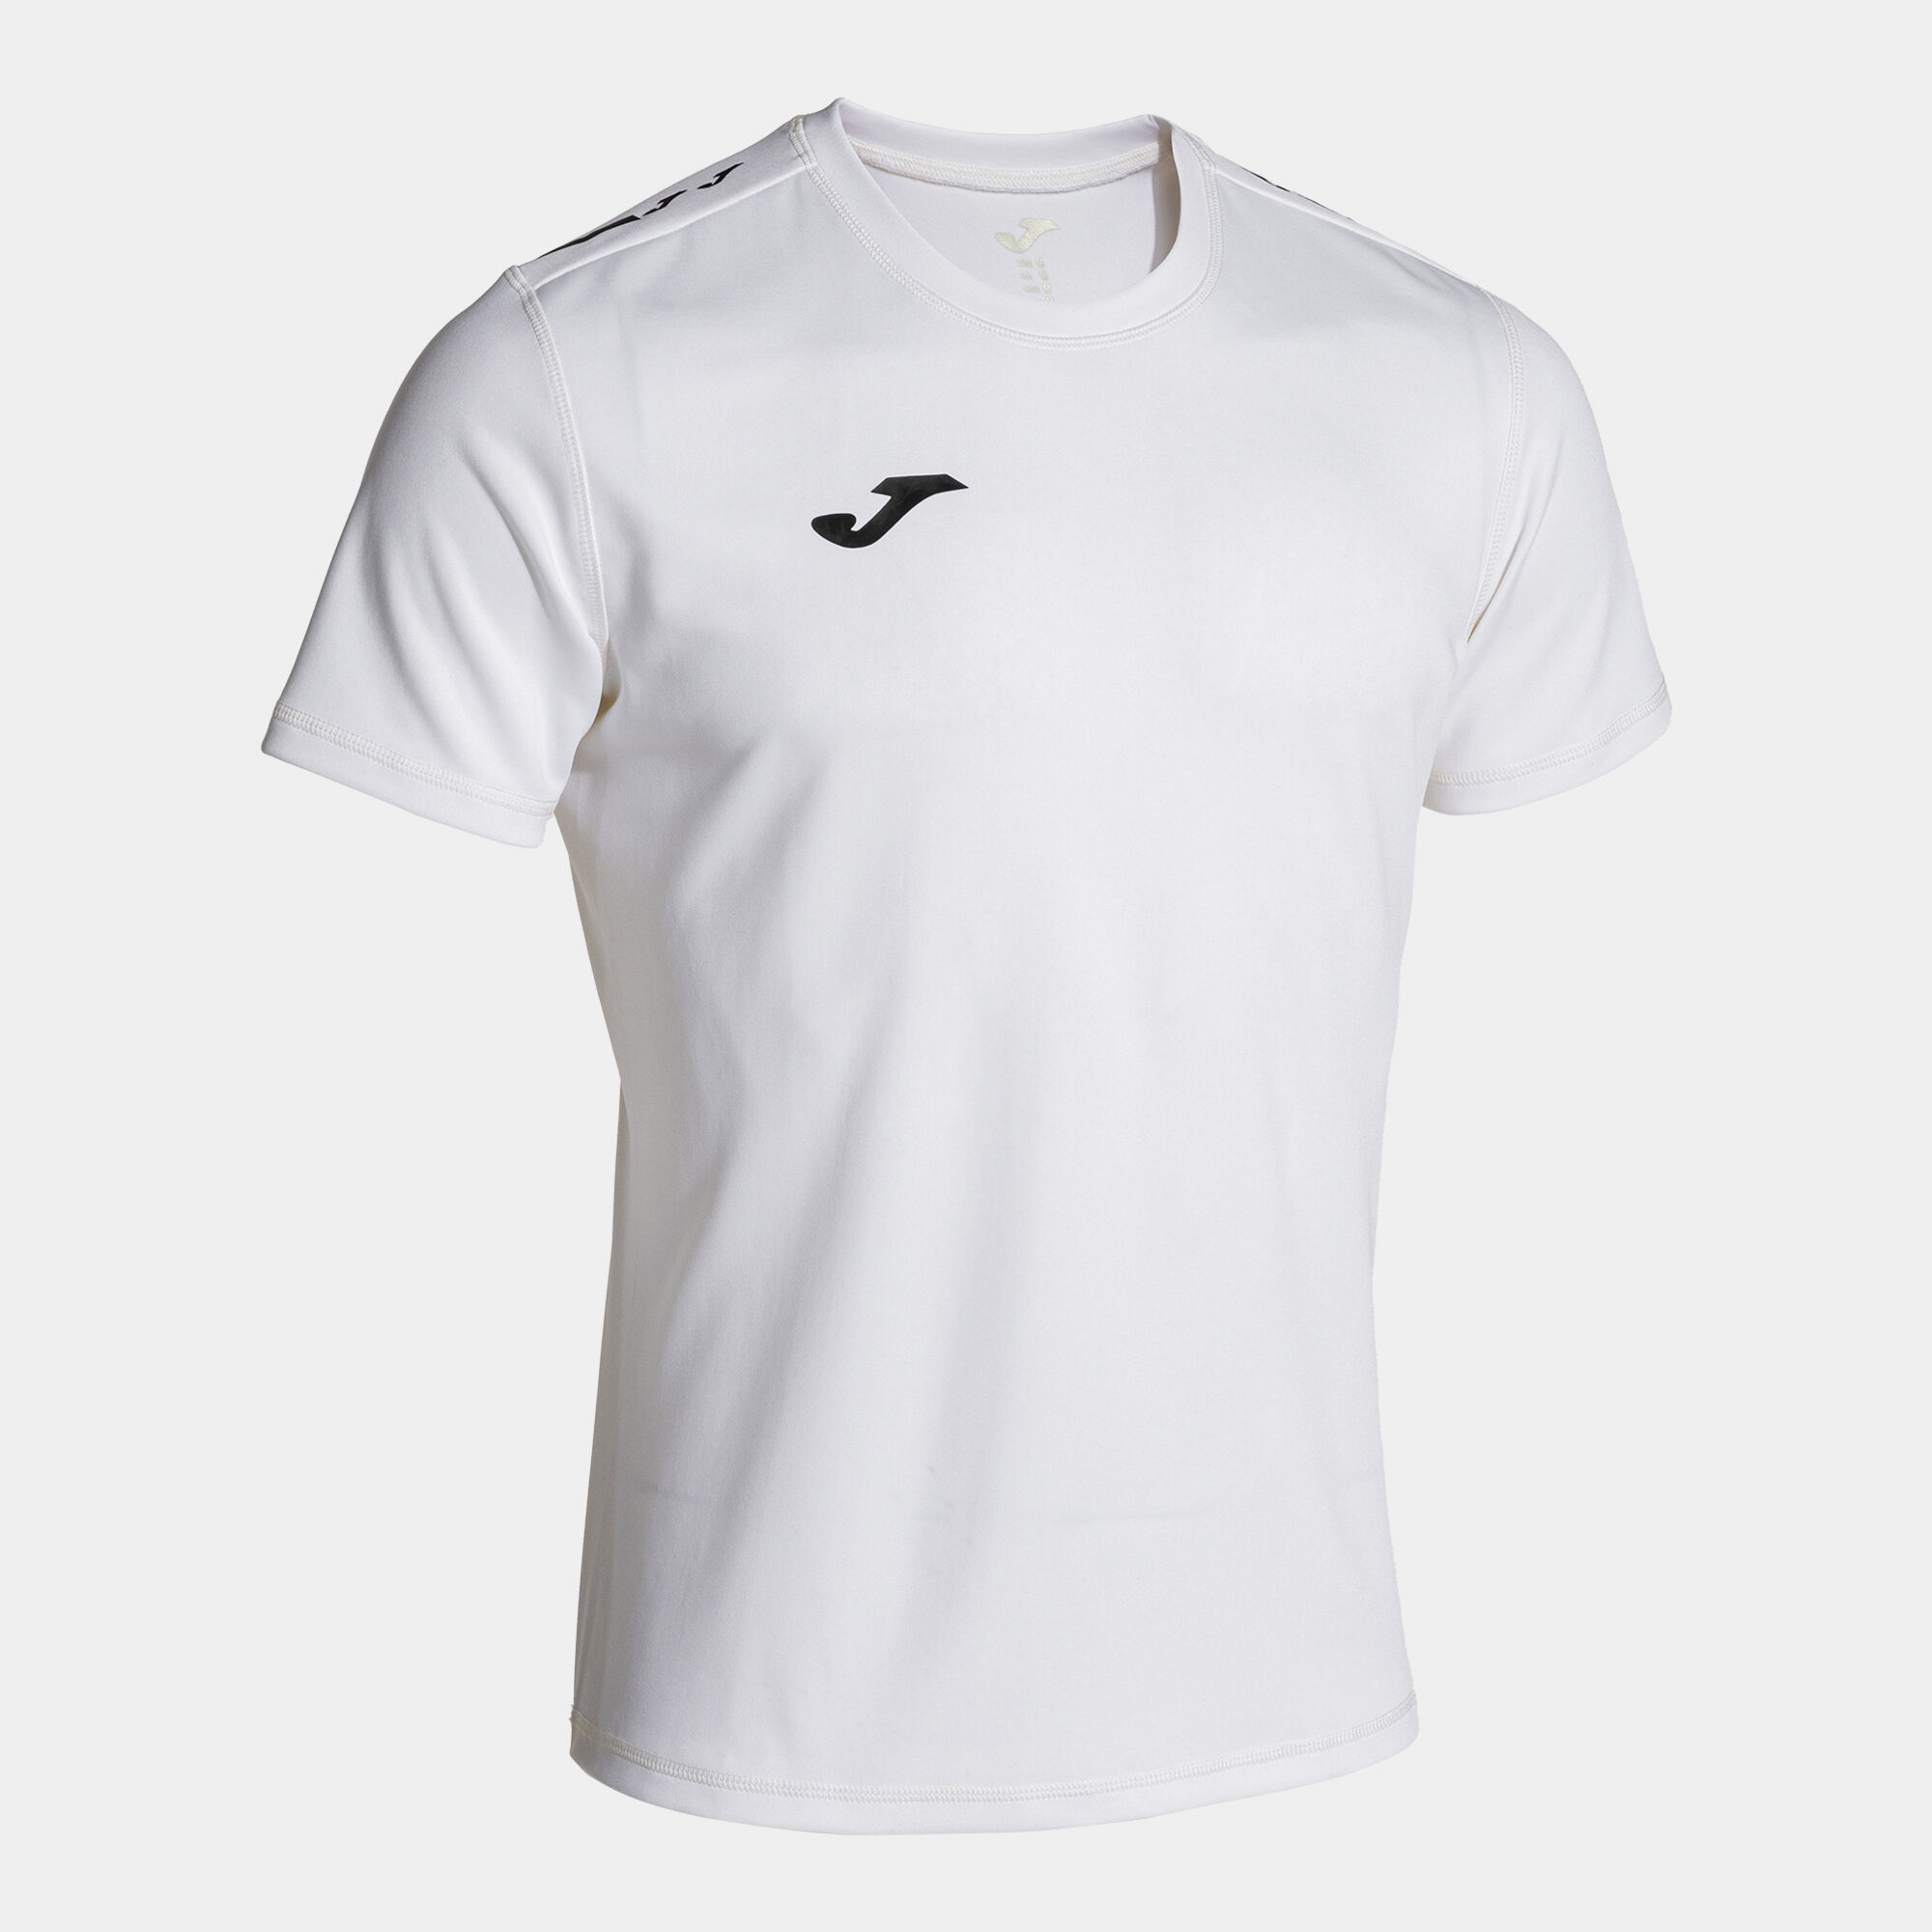 Camiseta manga corta hombre Olimpiada rugby blanco